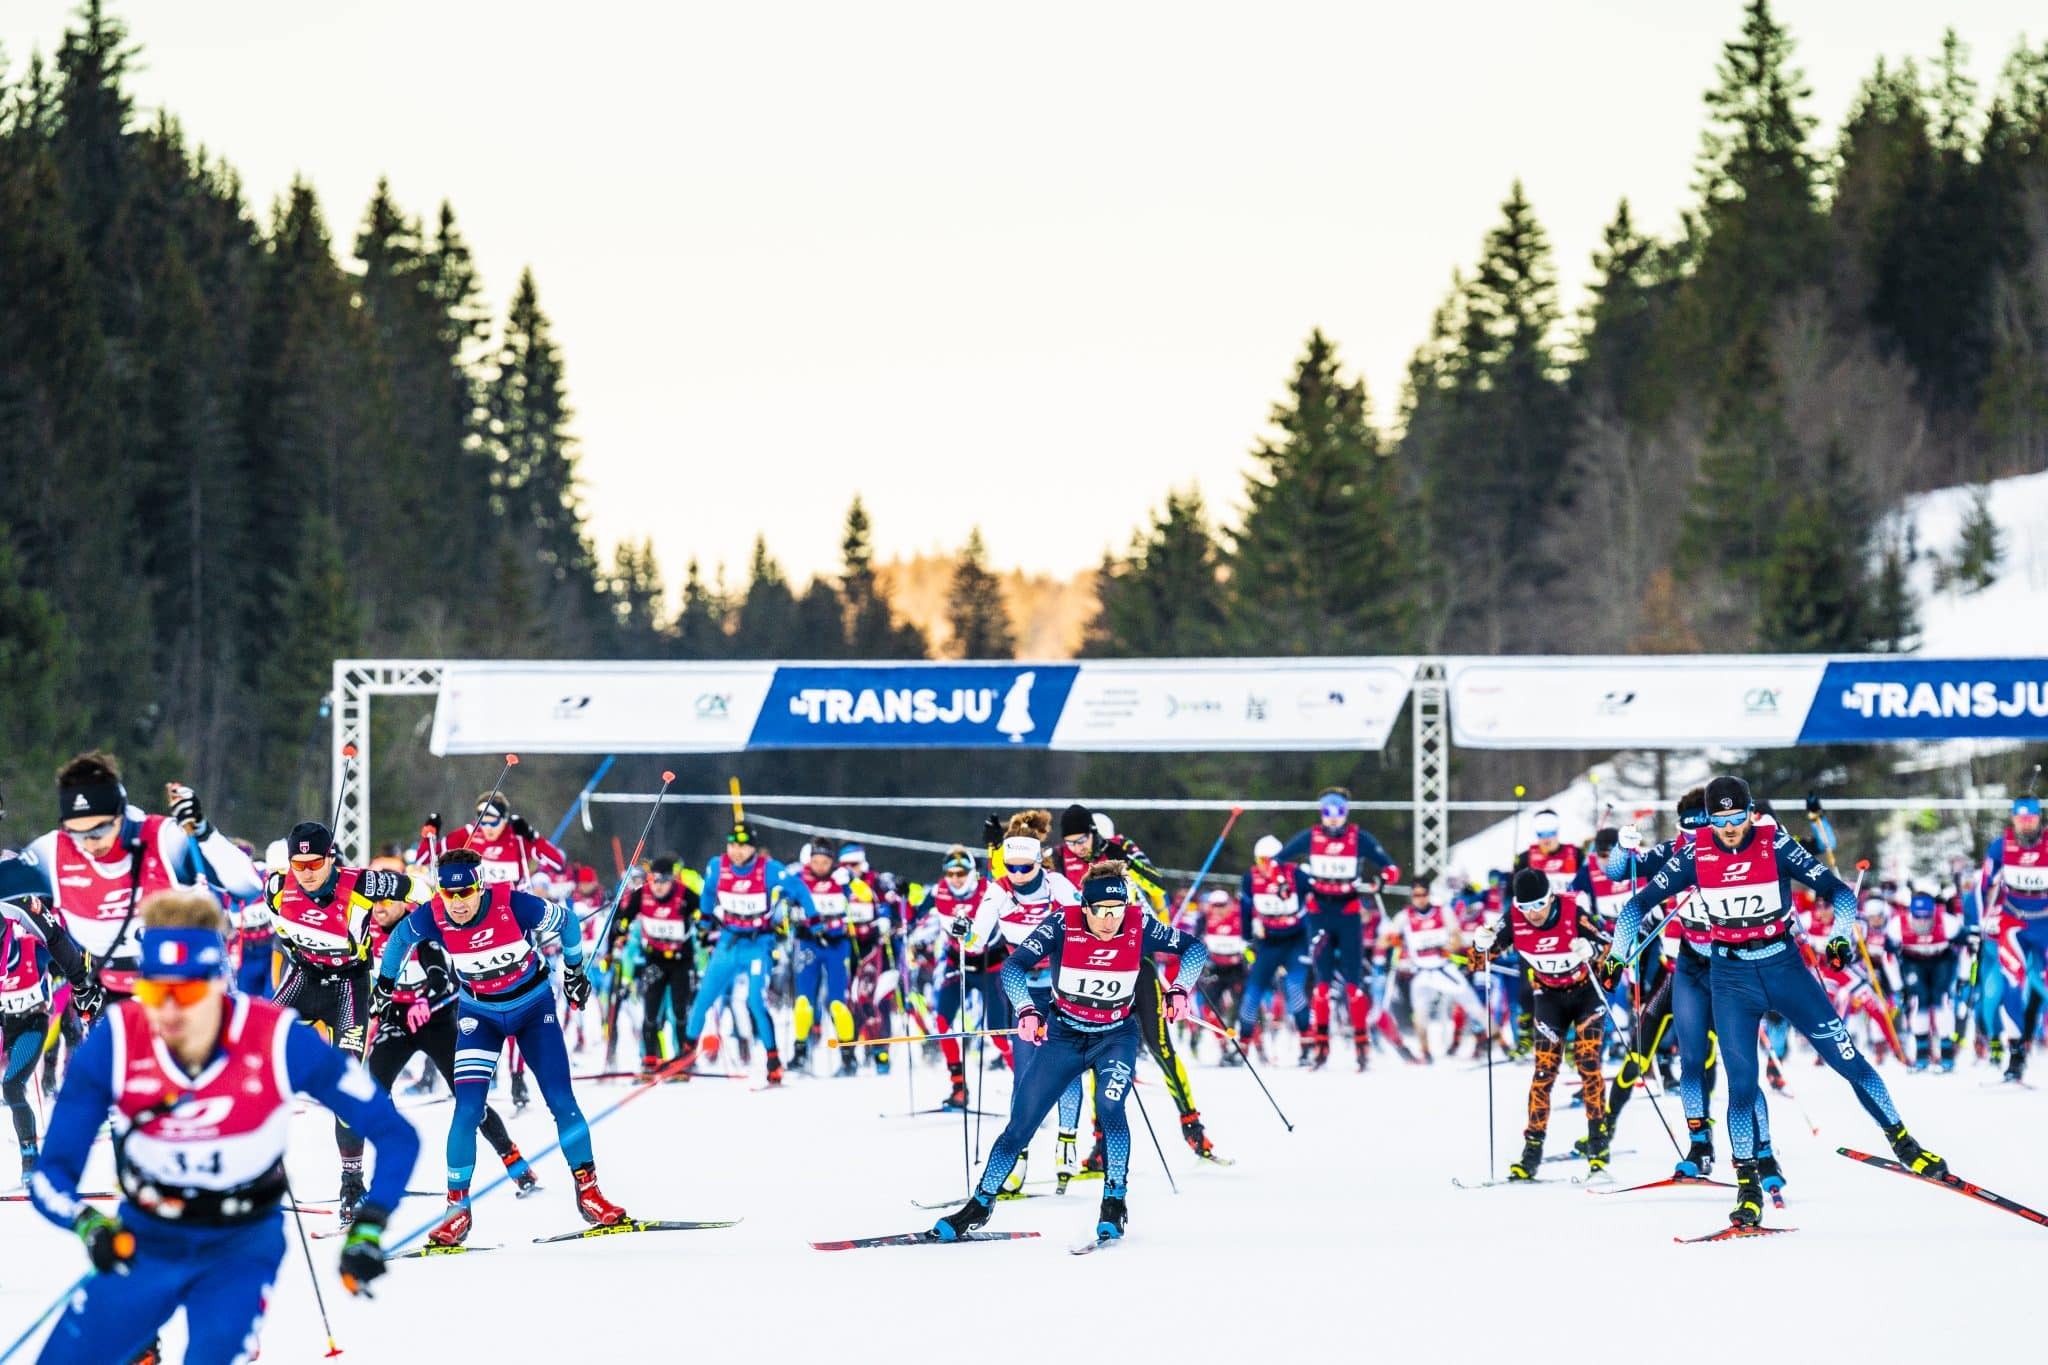 Start of the Transju cross-country ski race in France in the Jura